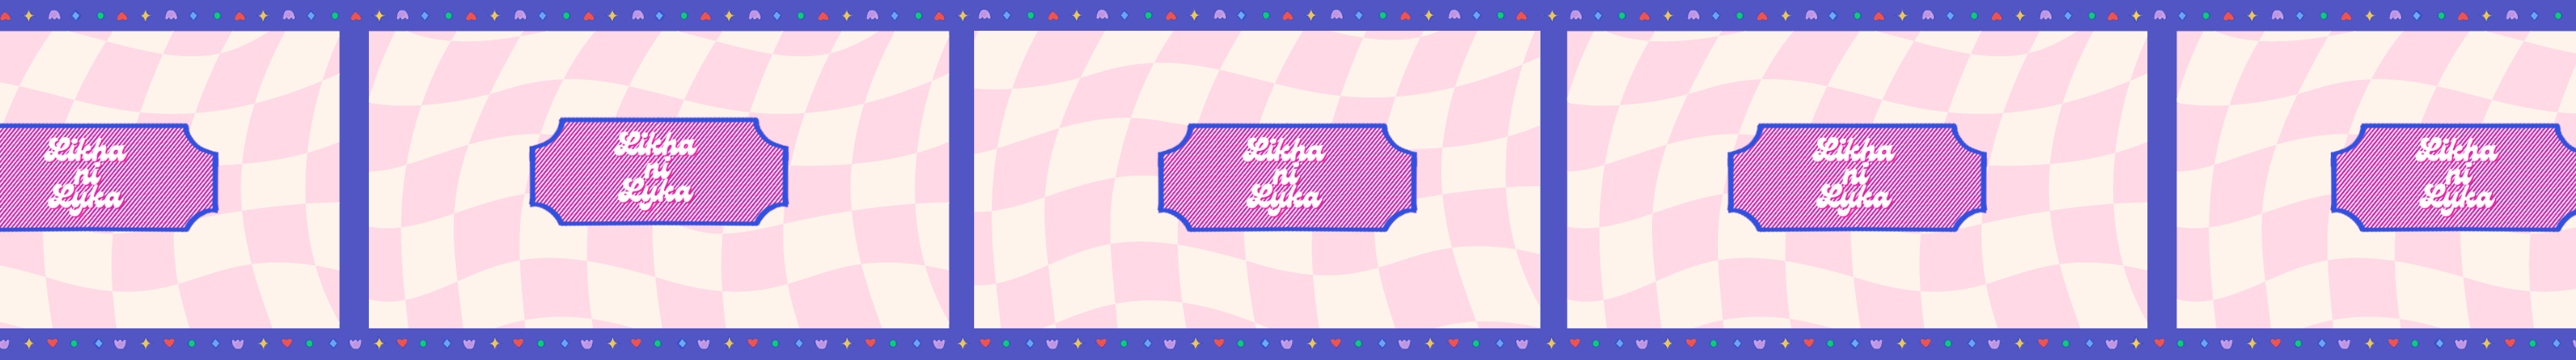 Likha ni Lyka's profile banner